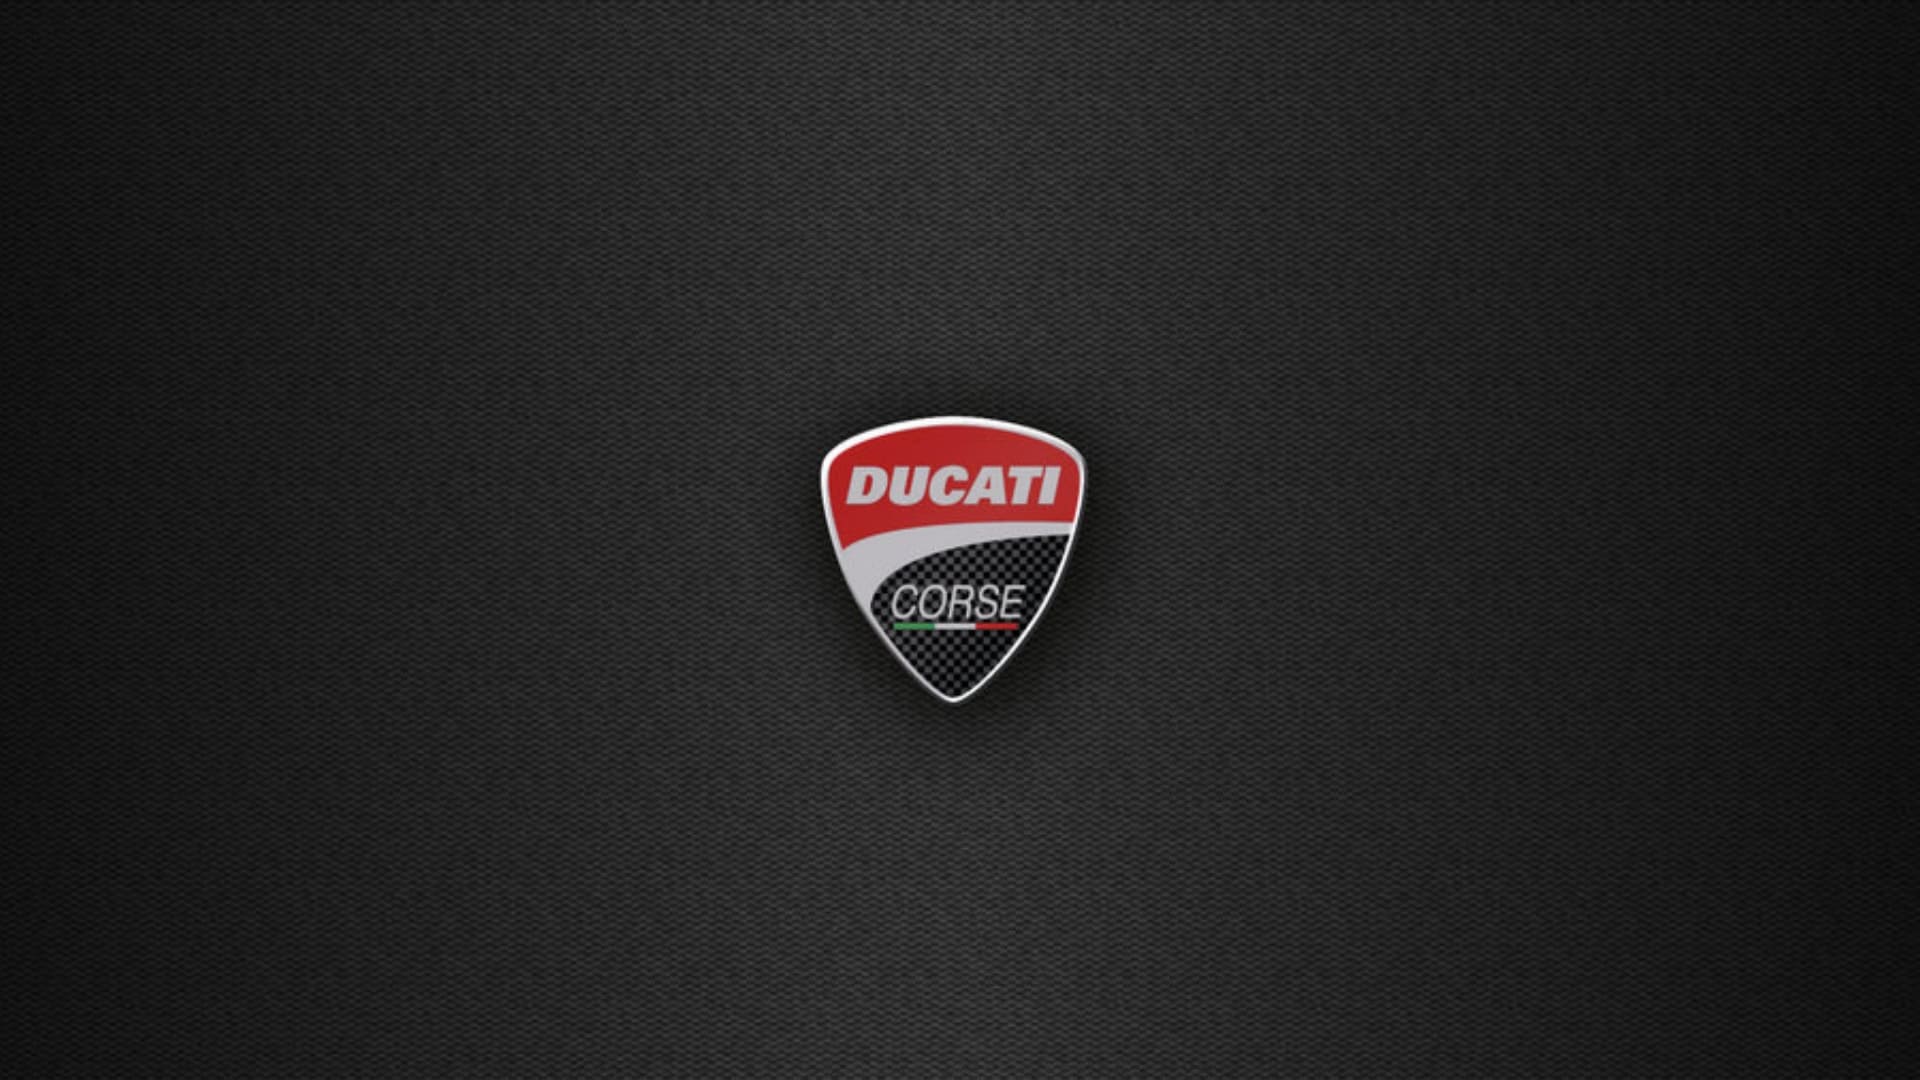 Ducati logo Wallpaper Download on 24wallpaper